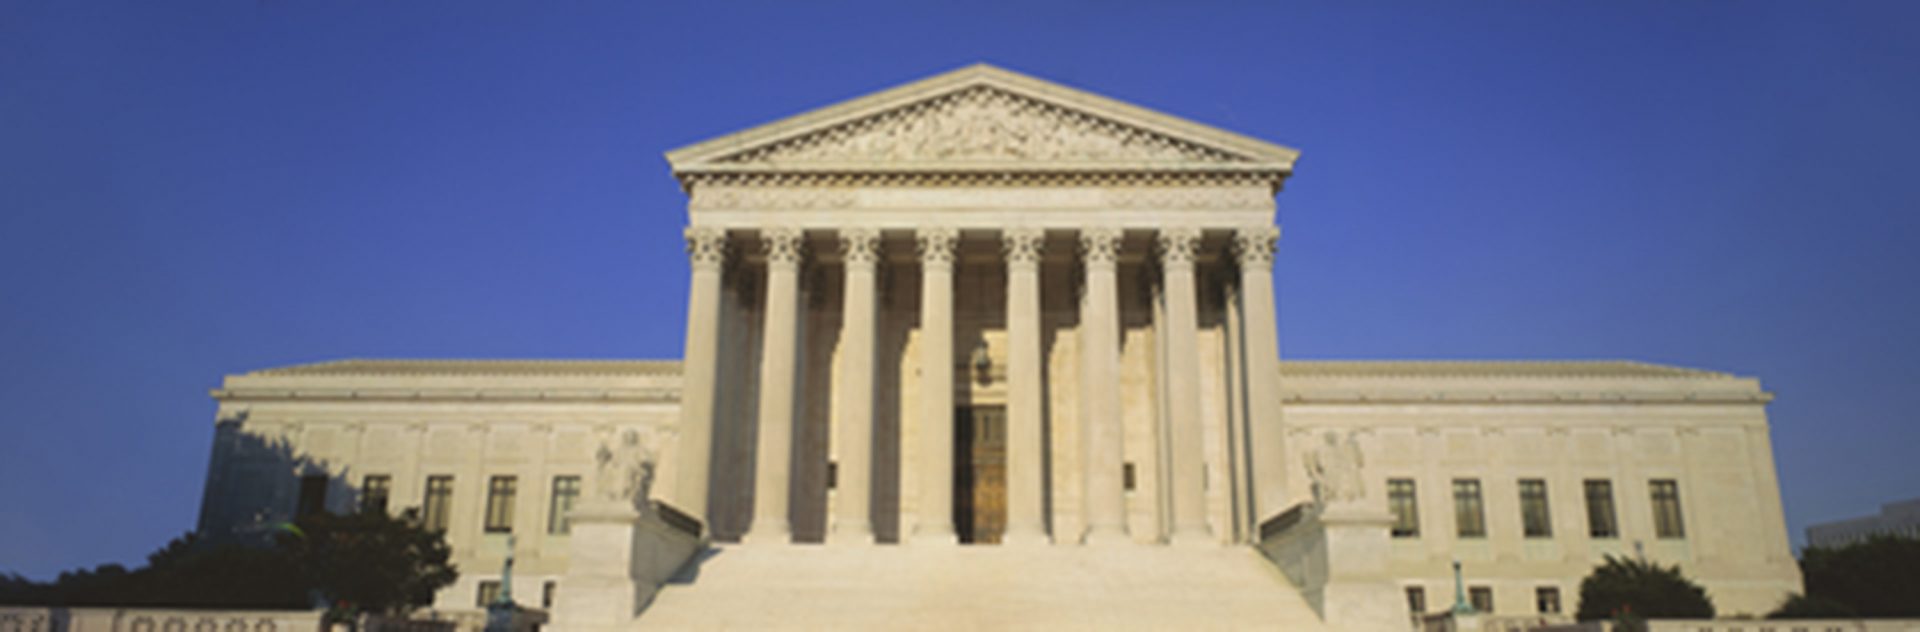 U.S.+Supreme+Court+Building+%28Dreamstime%2FTNS%29